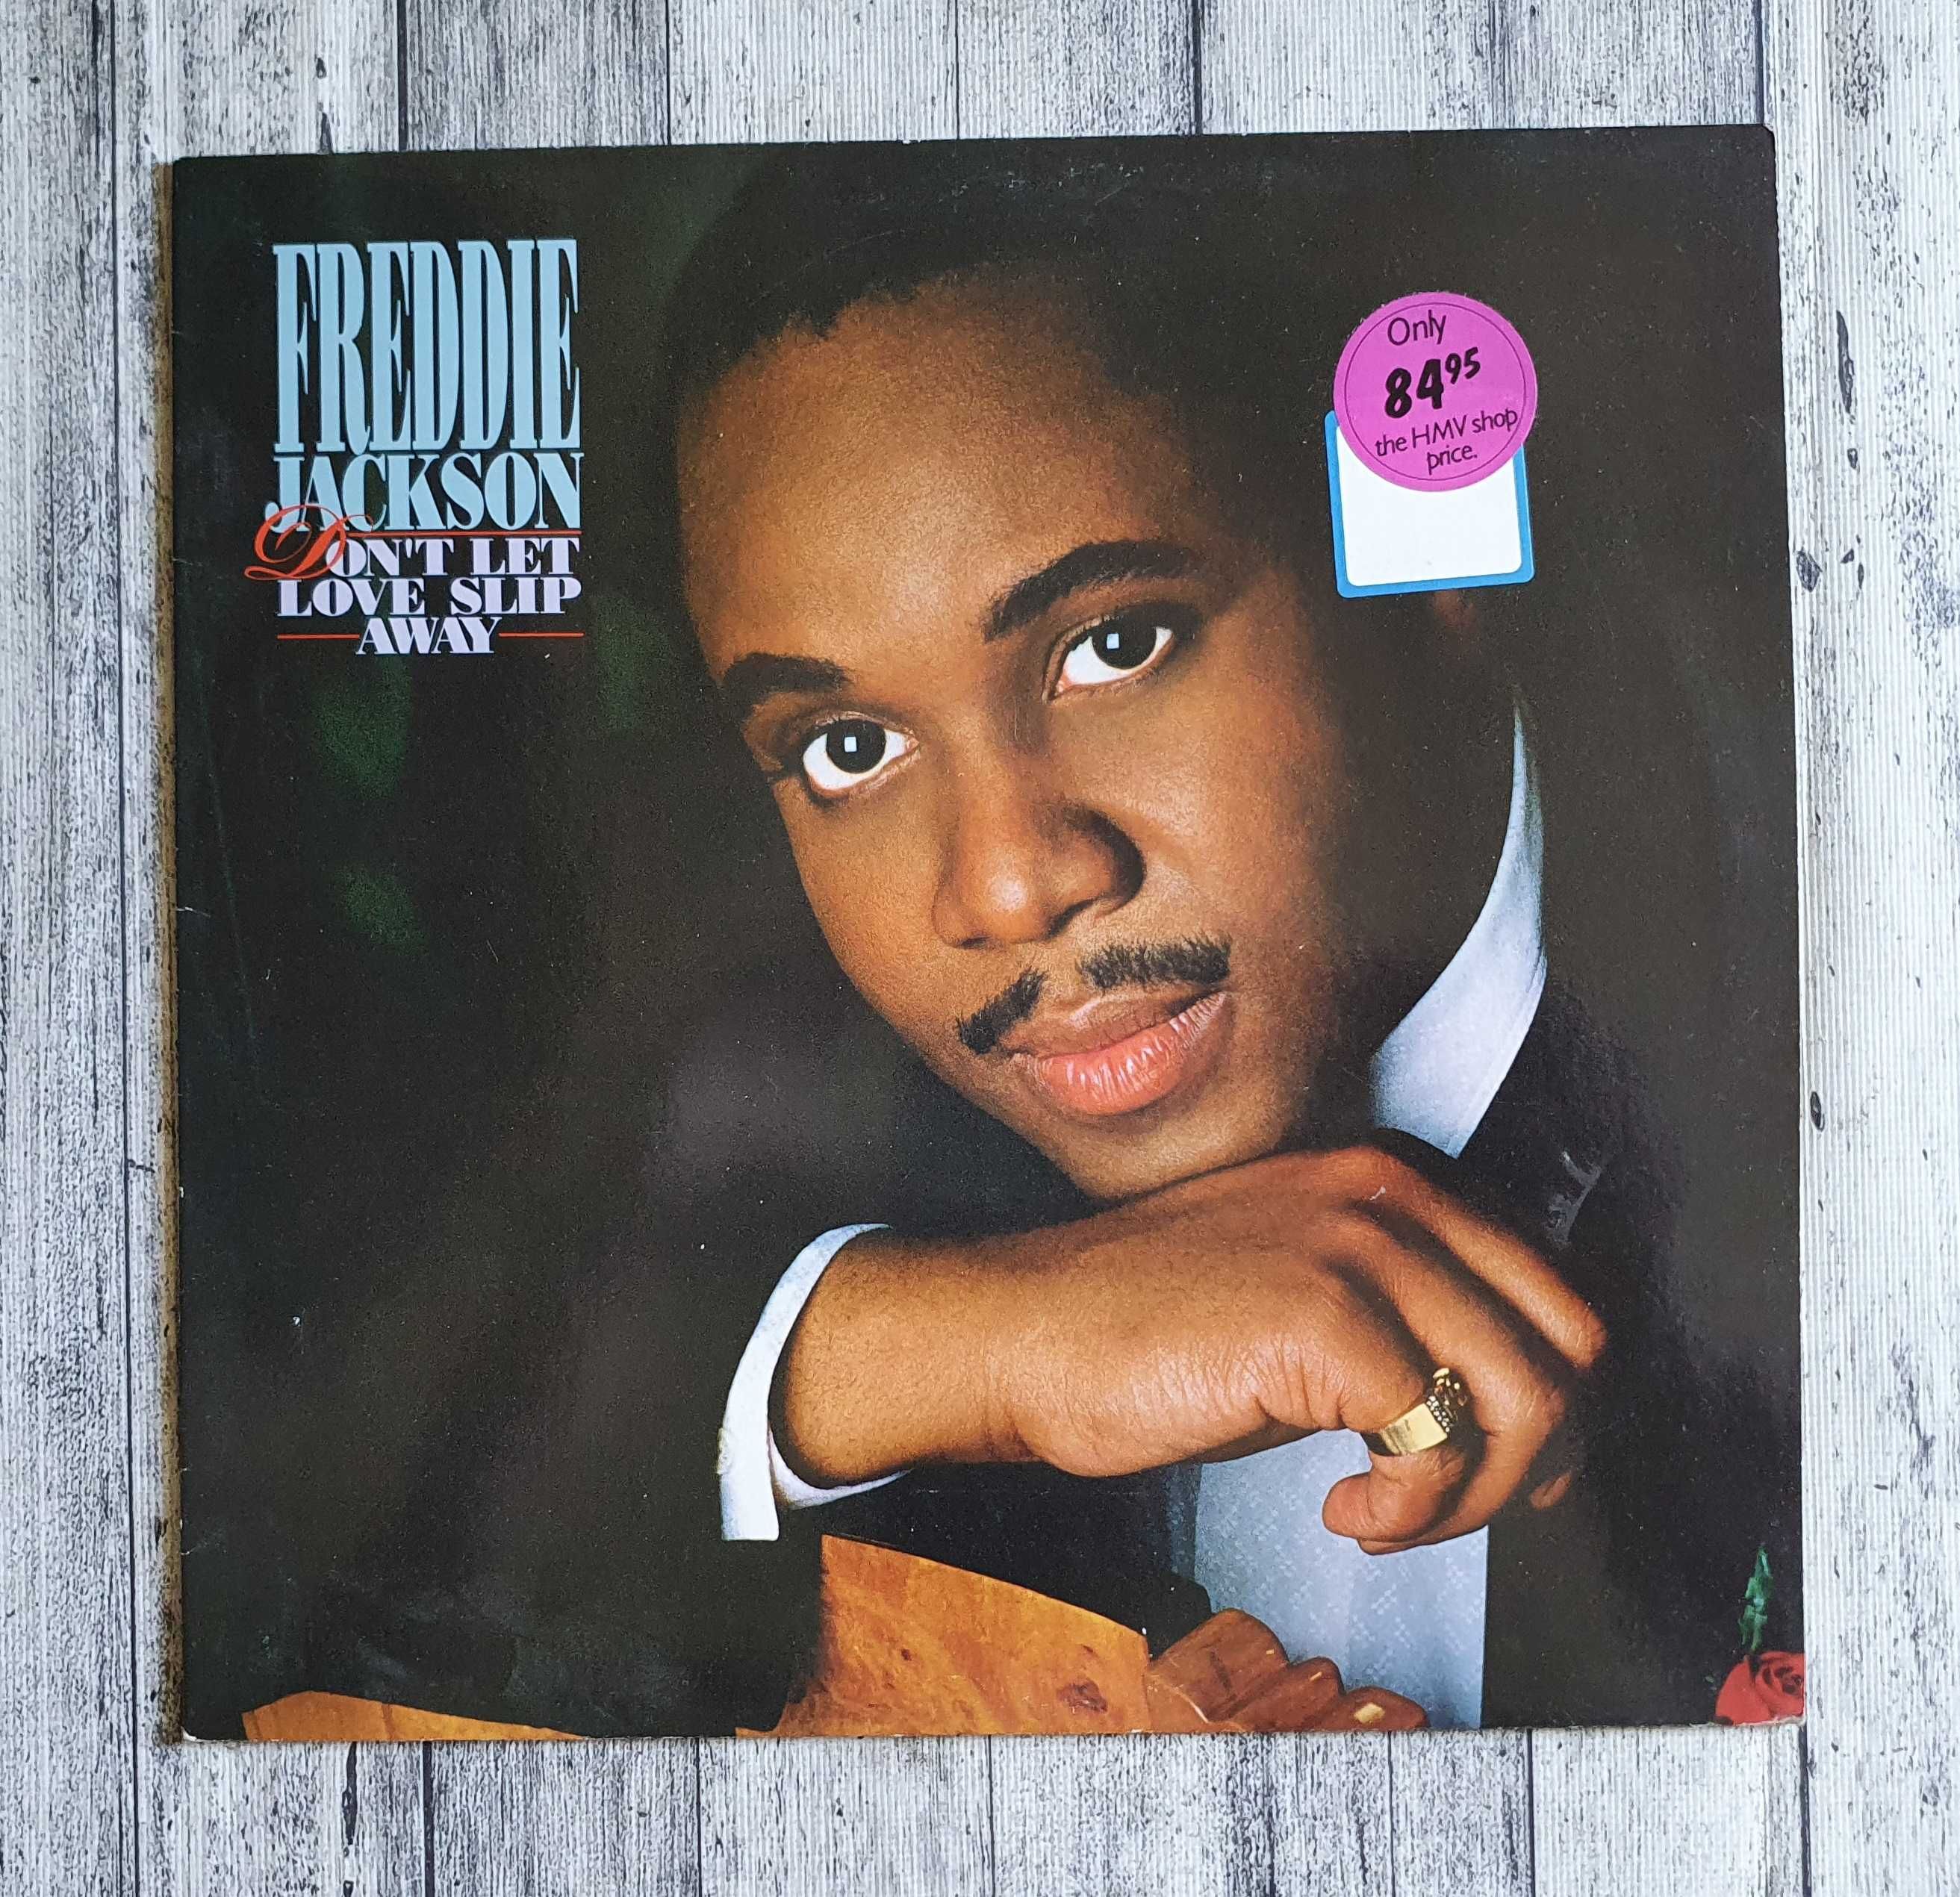 Freddie Jackson Don't Let Love Slip Away LP 12